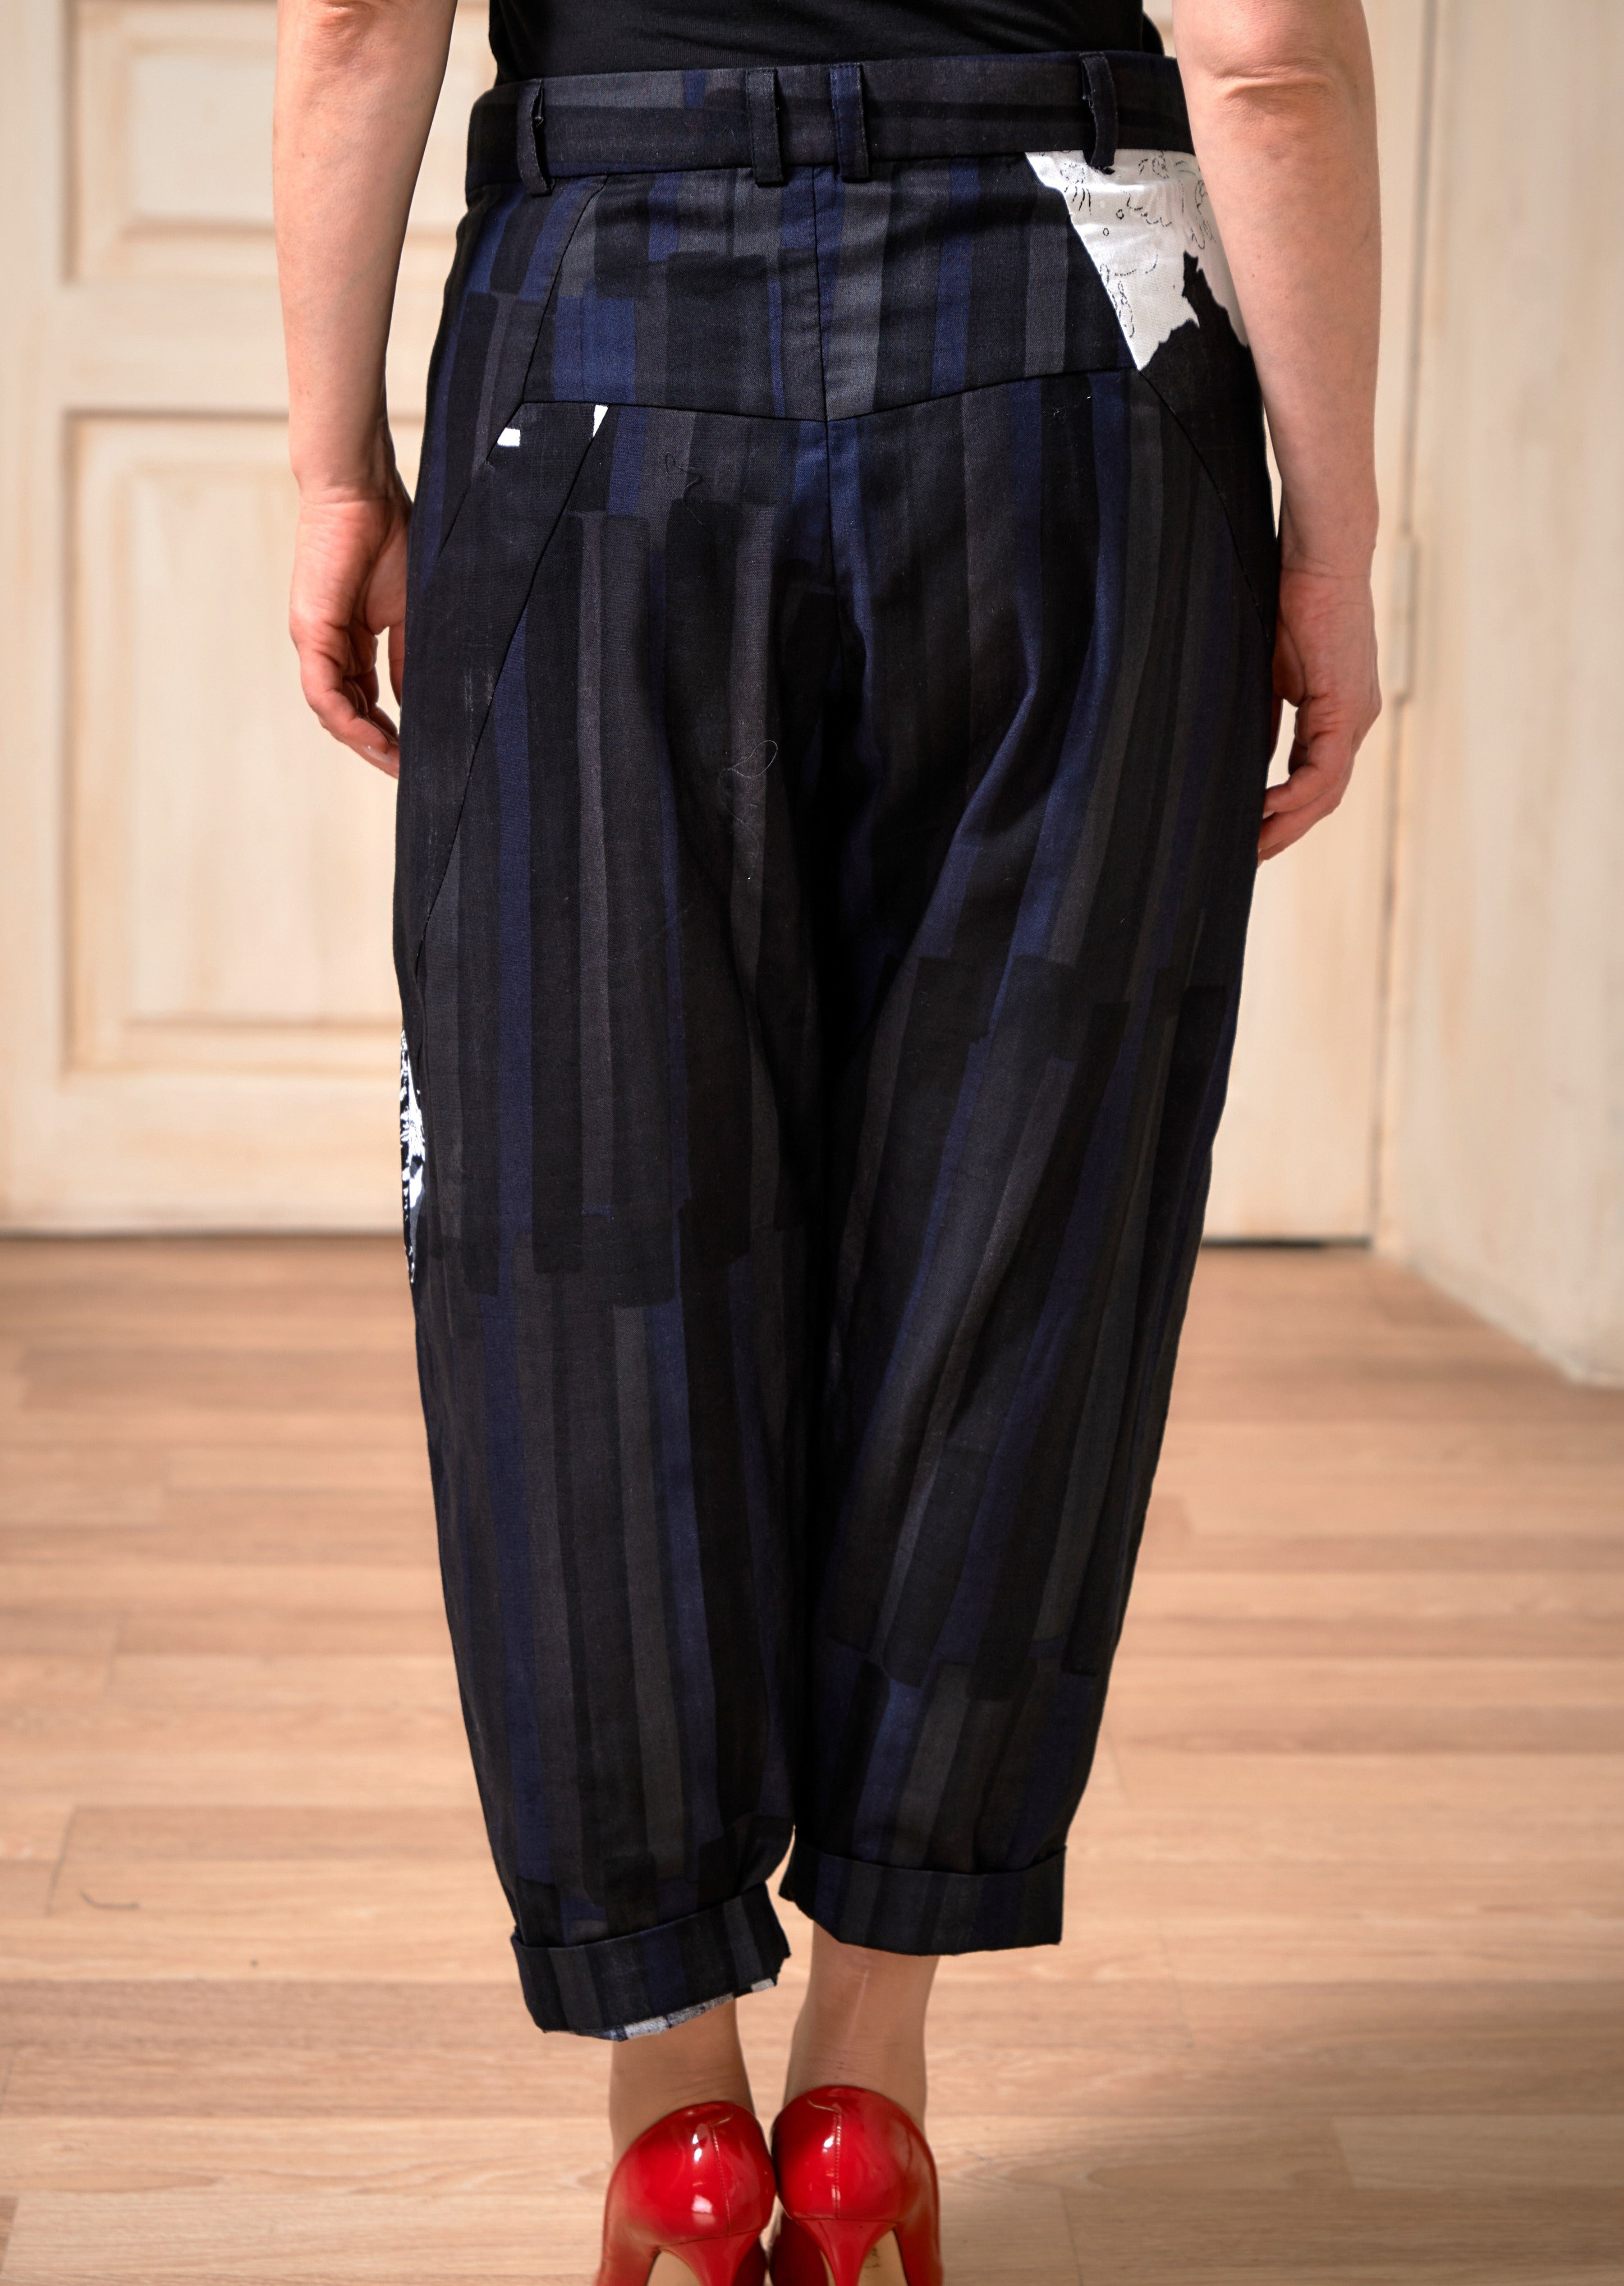 NY77 Design - Brady Cotton Pants